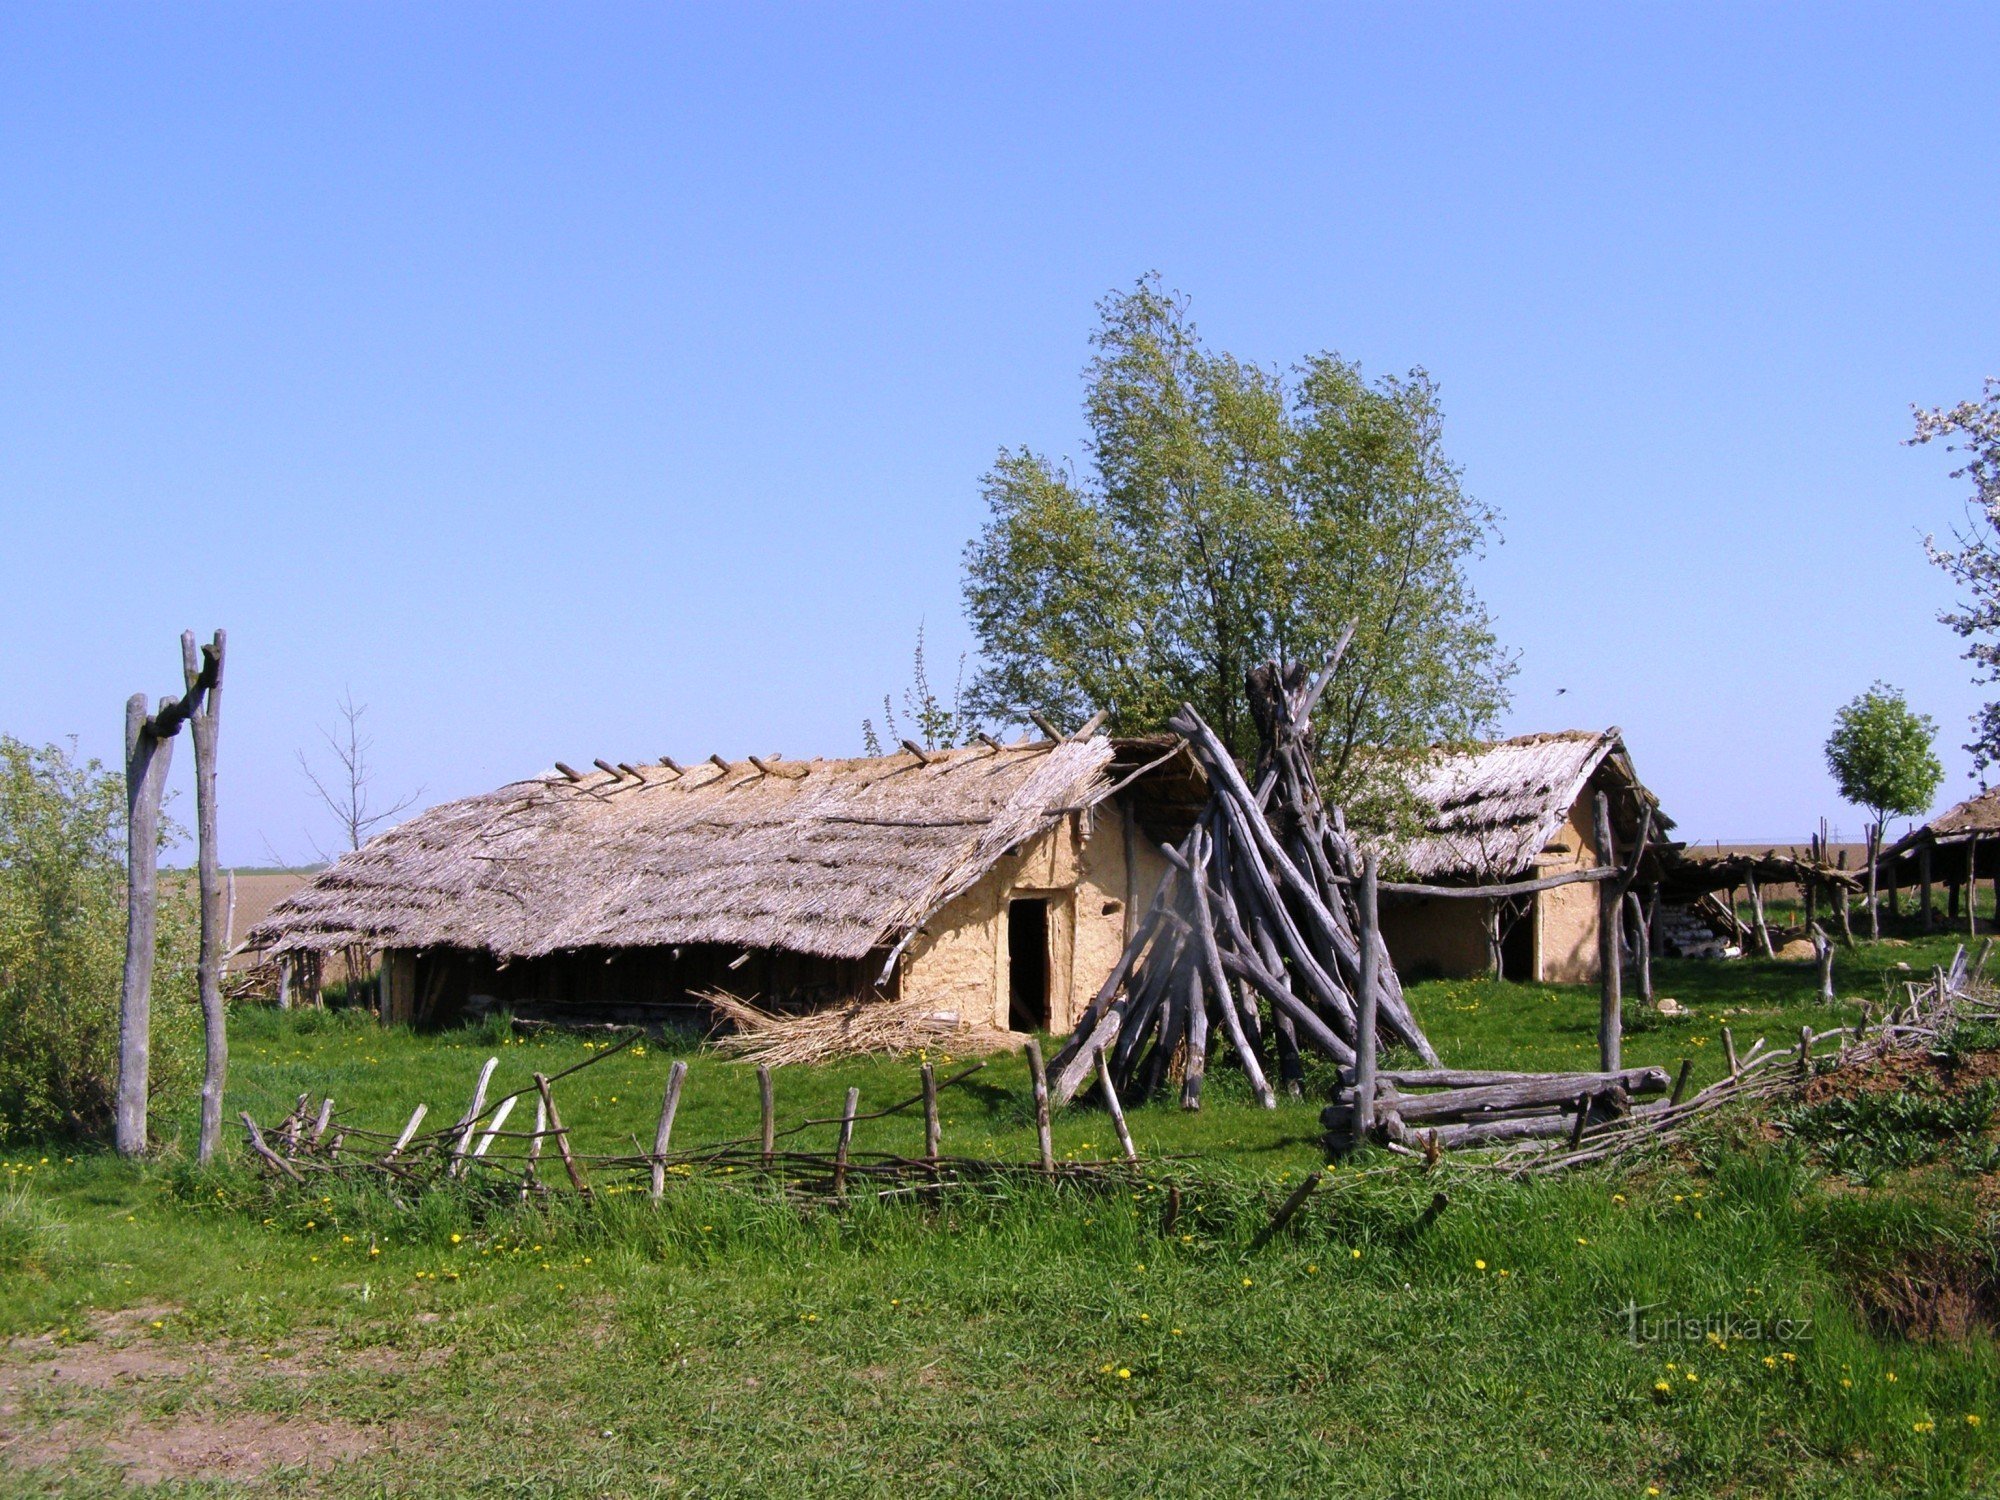 Všestary - Centre d'archéologie expérimentale